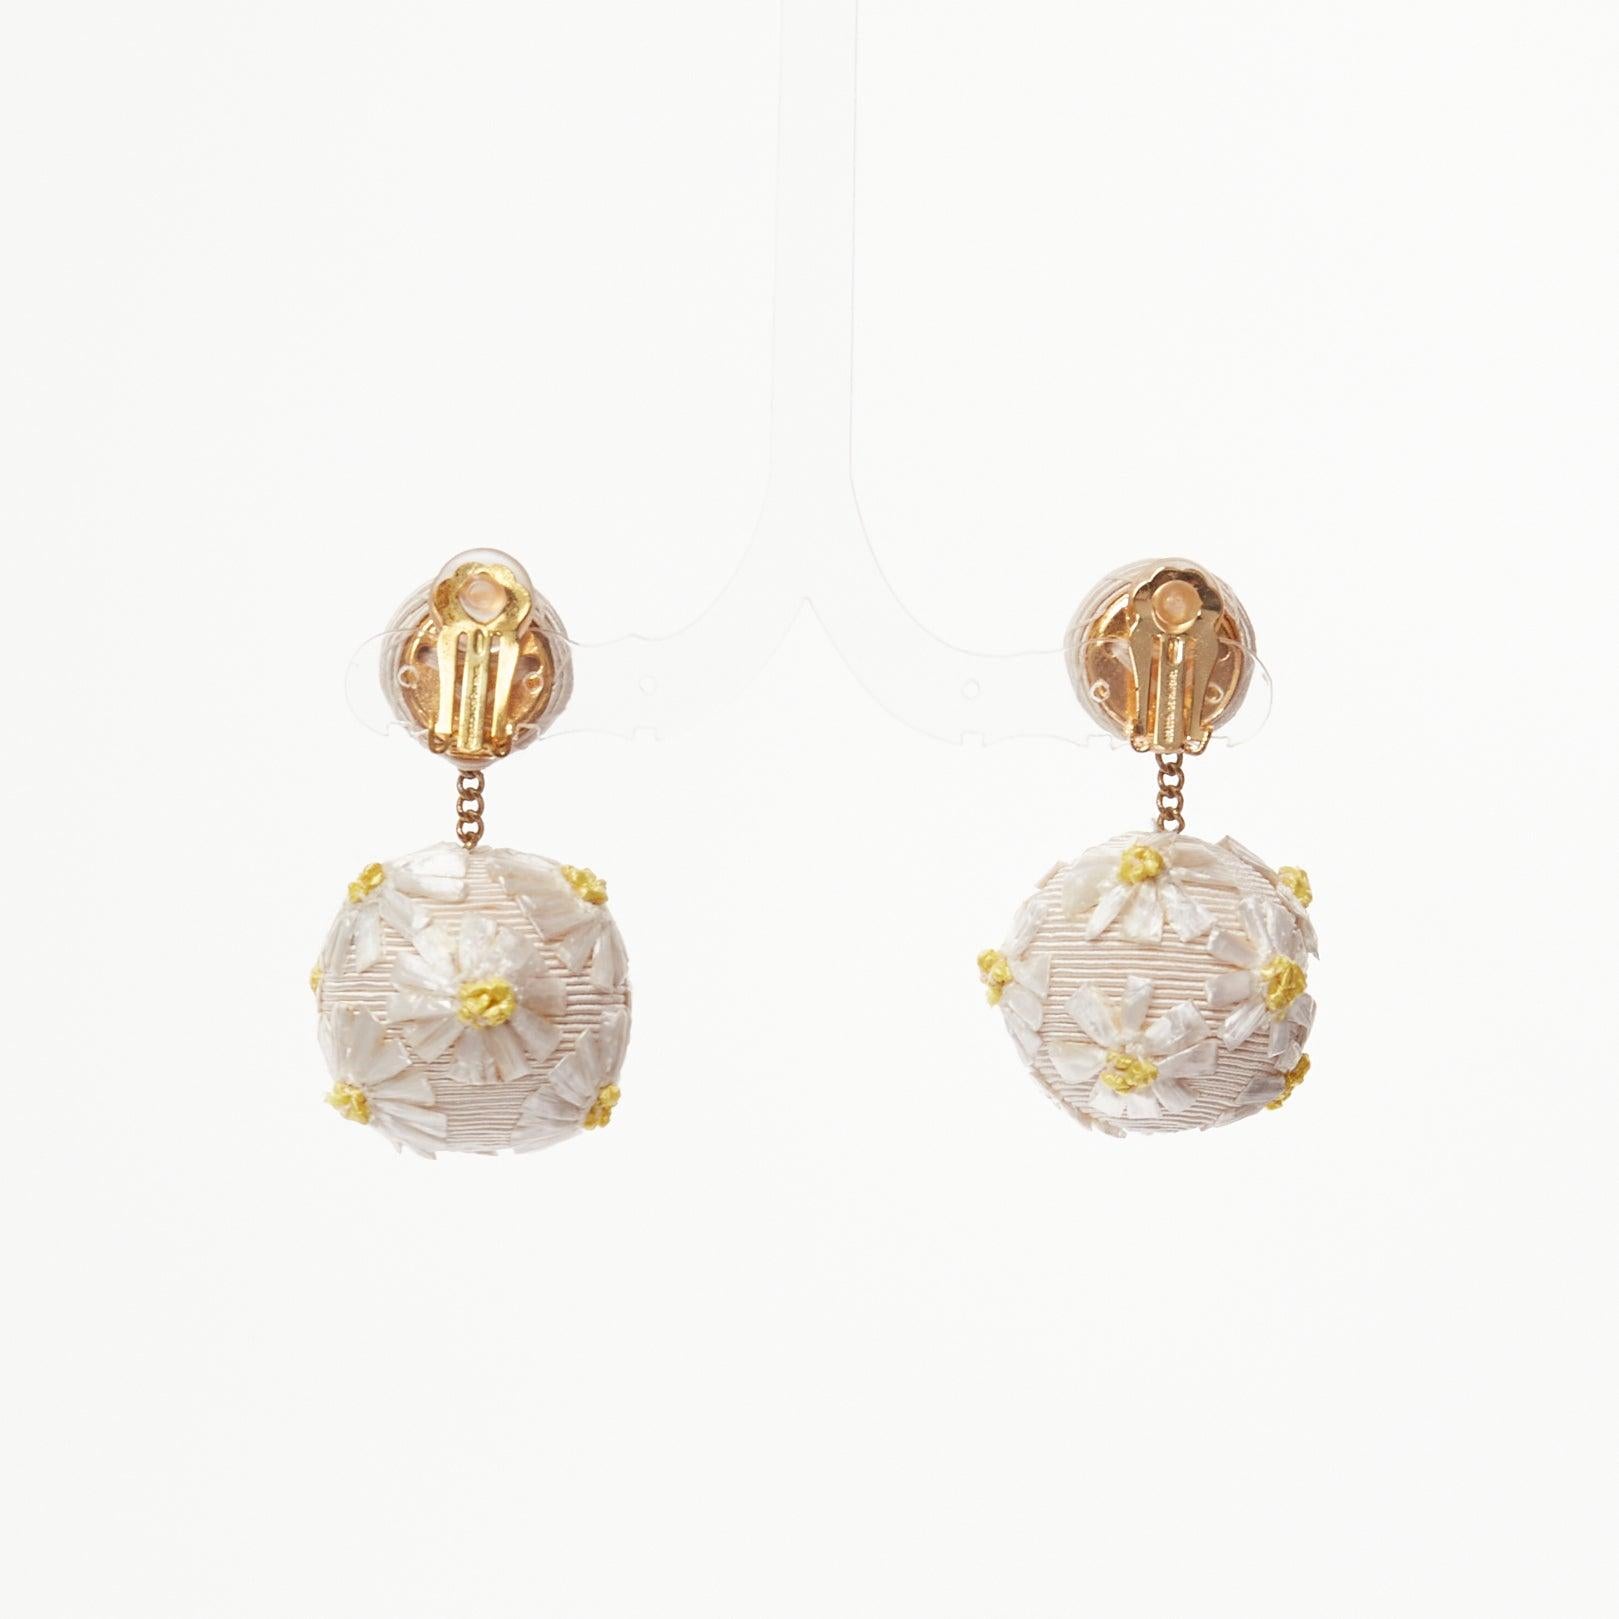 REBECCA DE RAVENEL cream yellow daisy applique clip on drop earrings For Sale 1